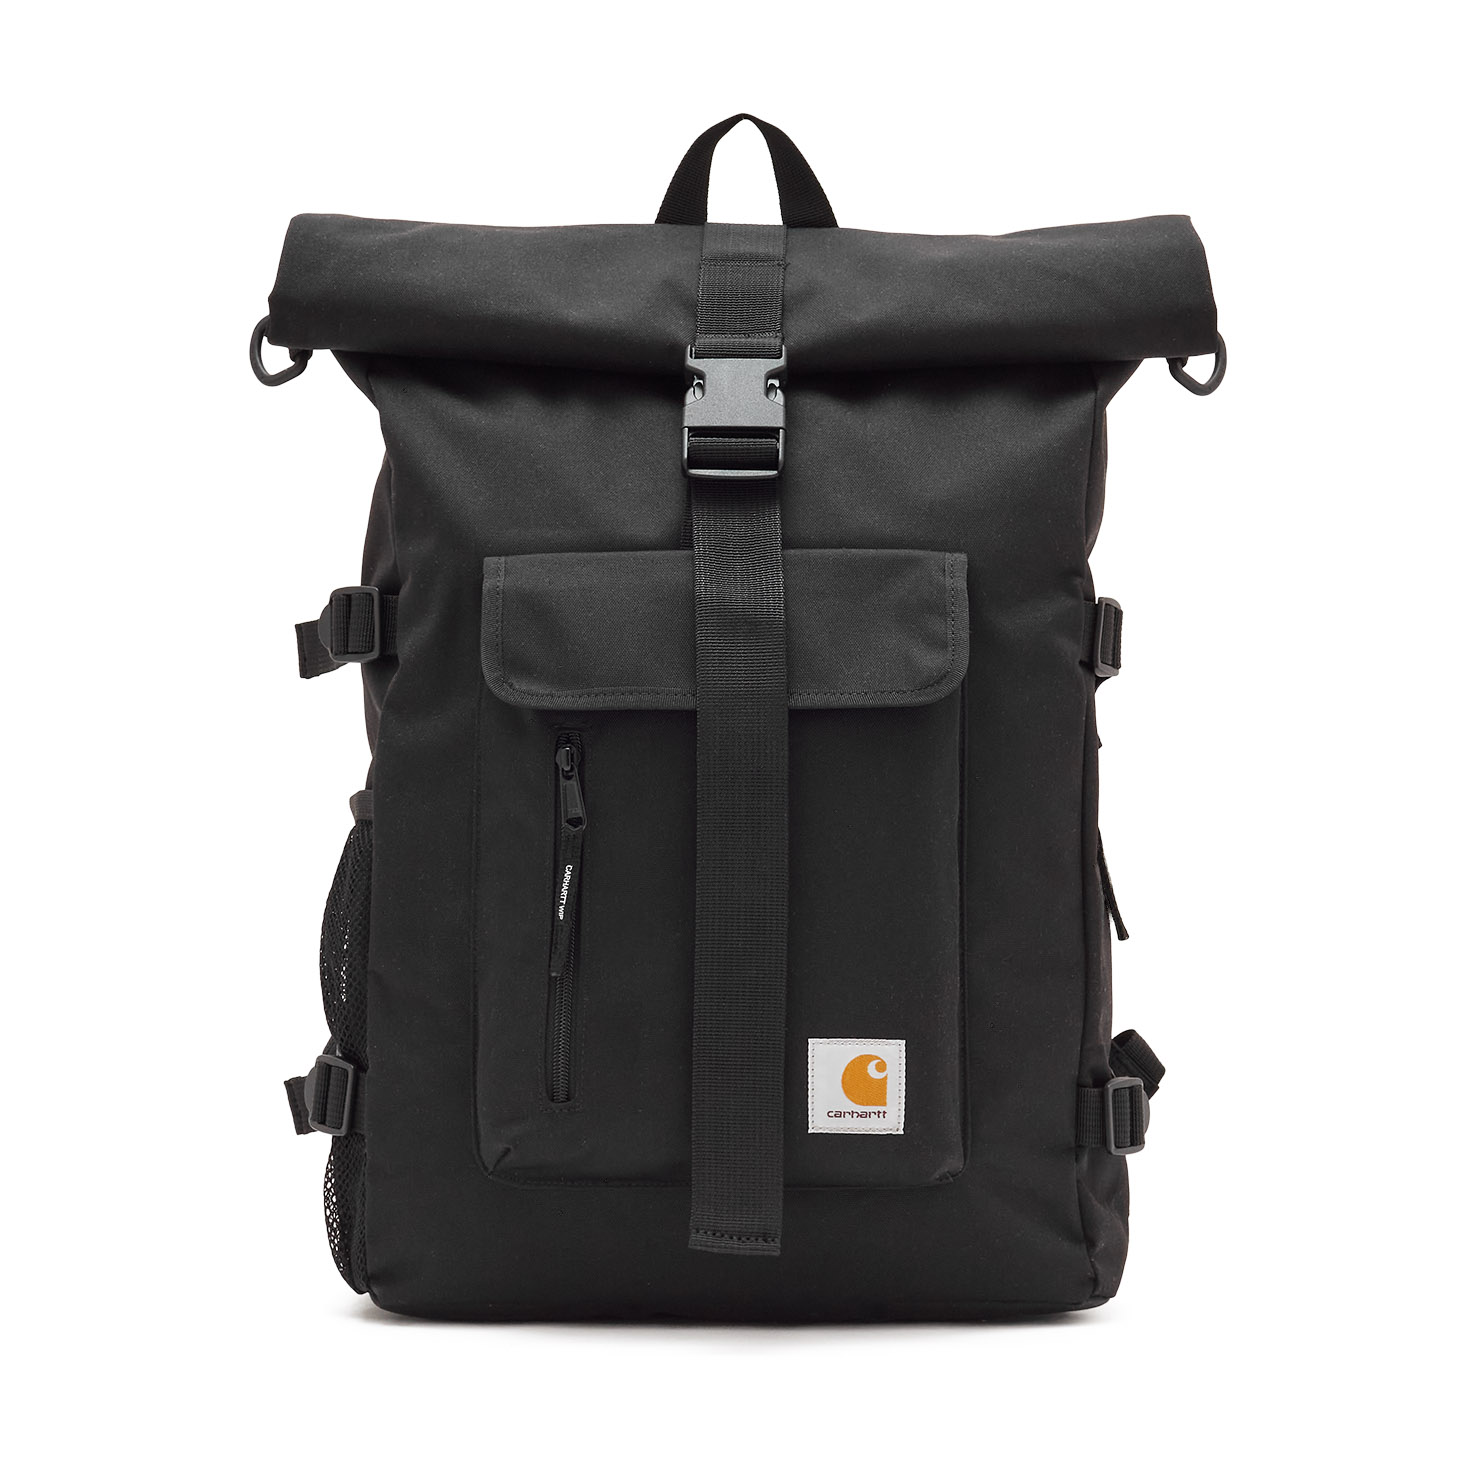 Philis Backpack CARHARTT, размер Один размер, цвет черный